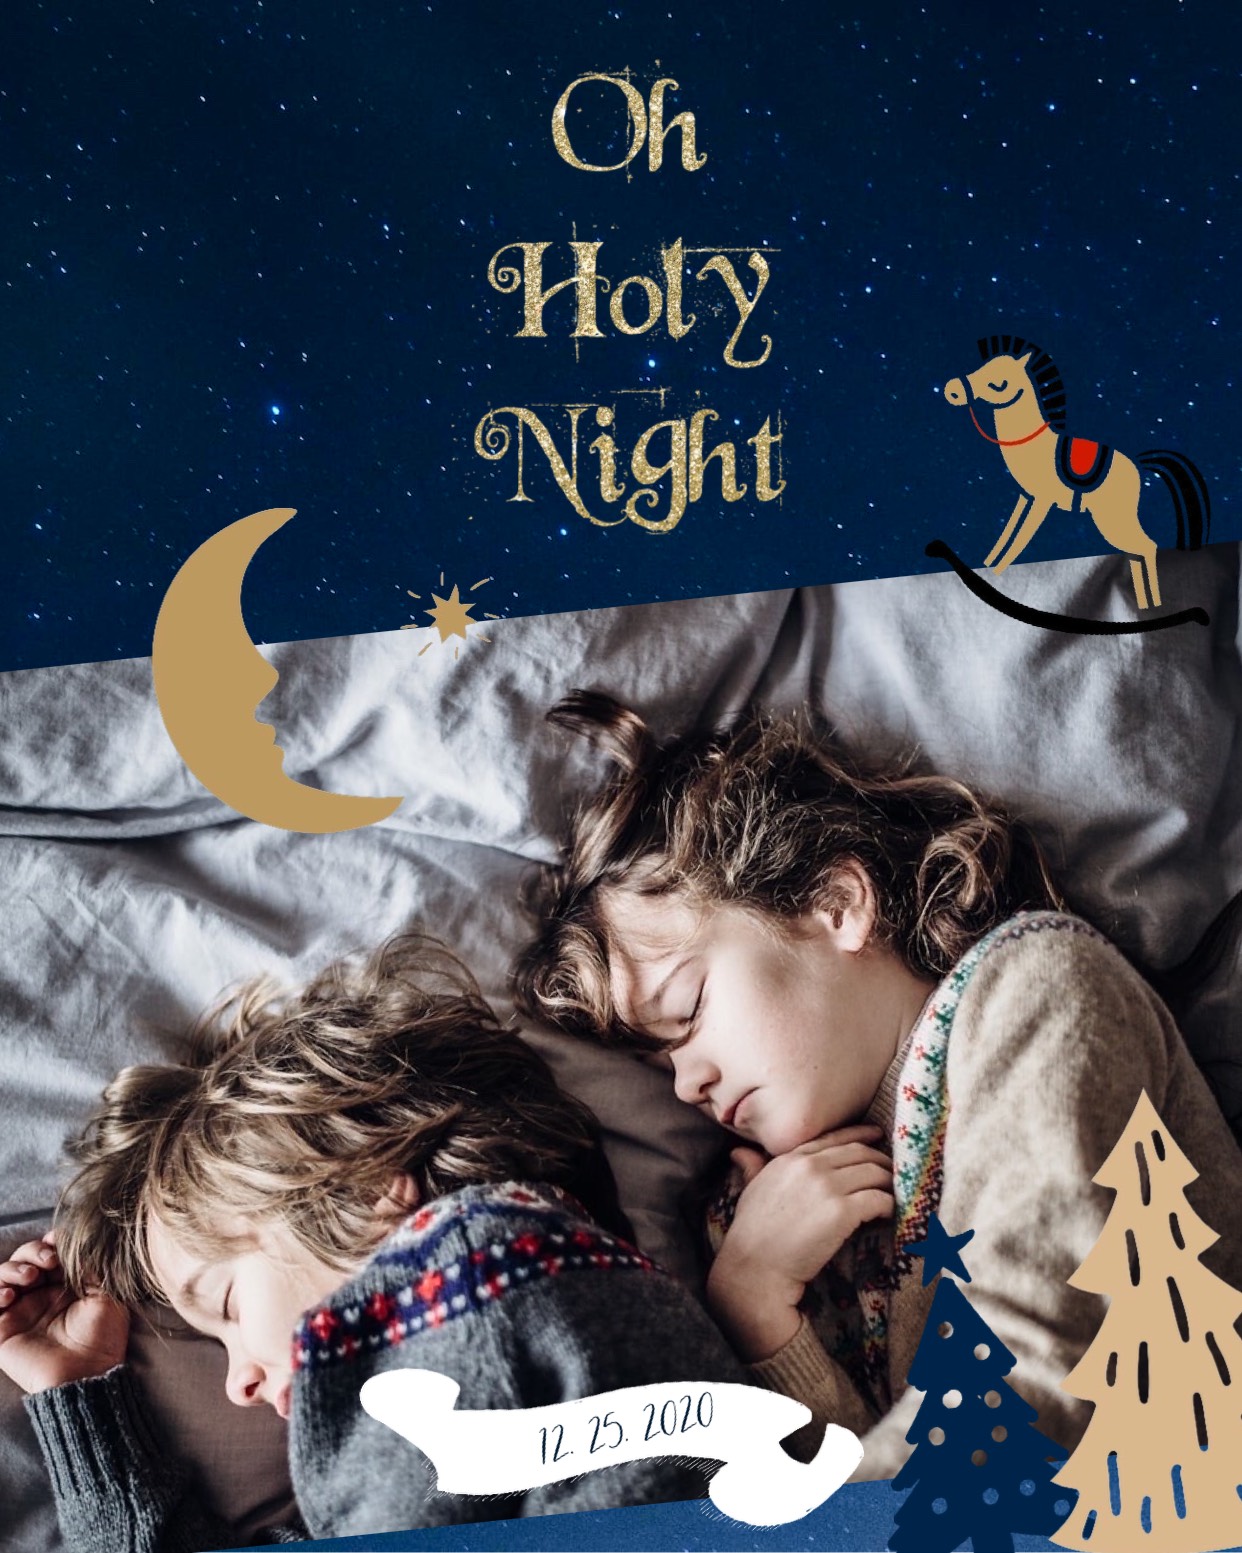 Boy and girl sleeping "holy night" Merry Christmas template